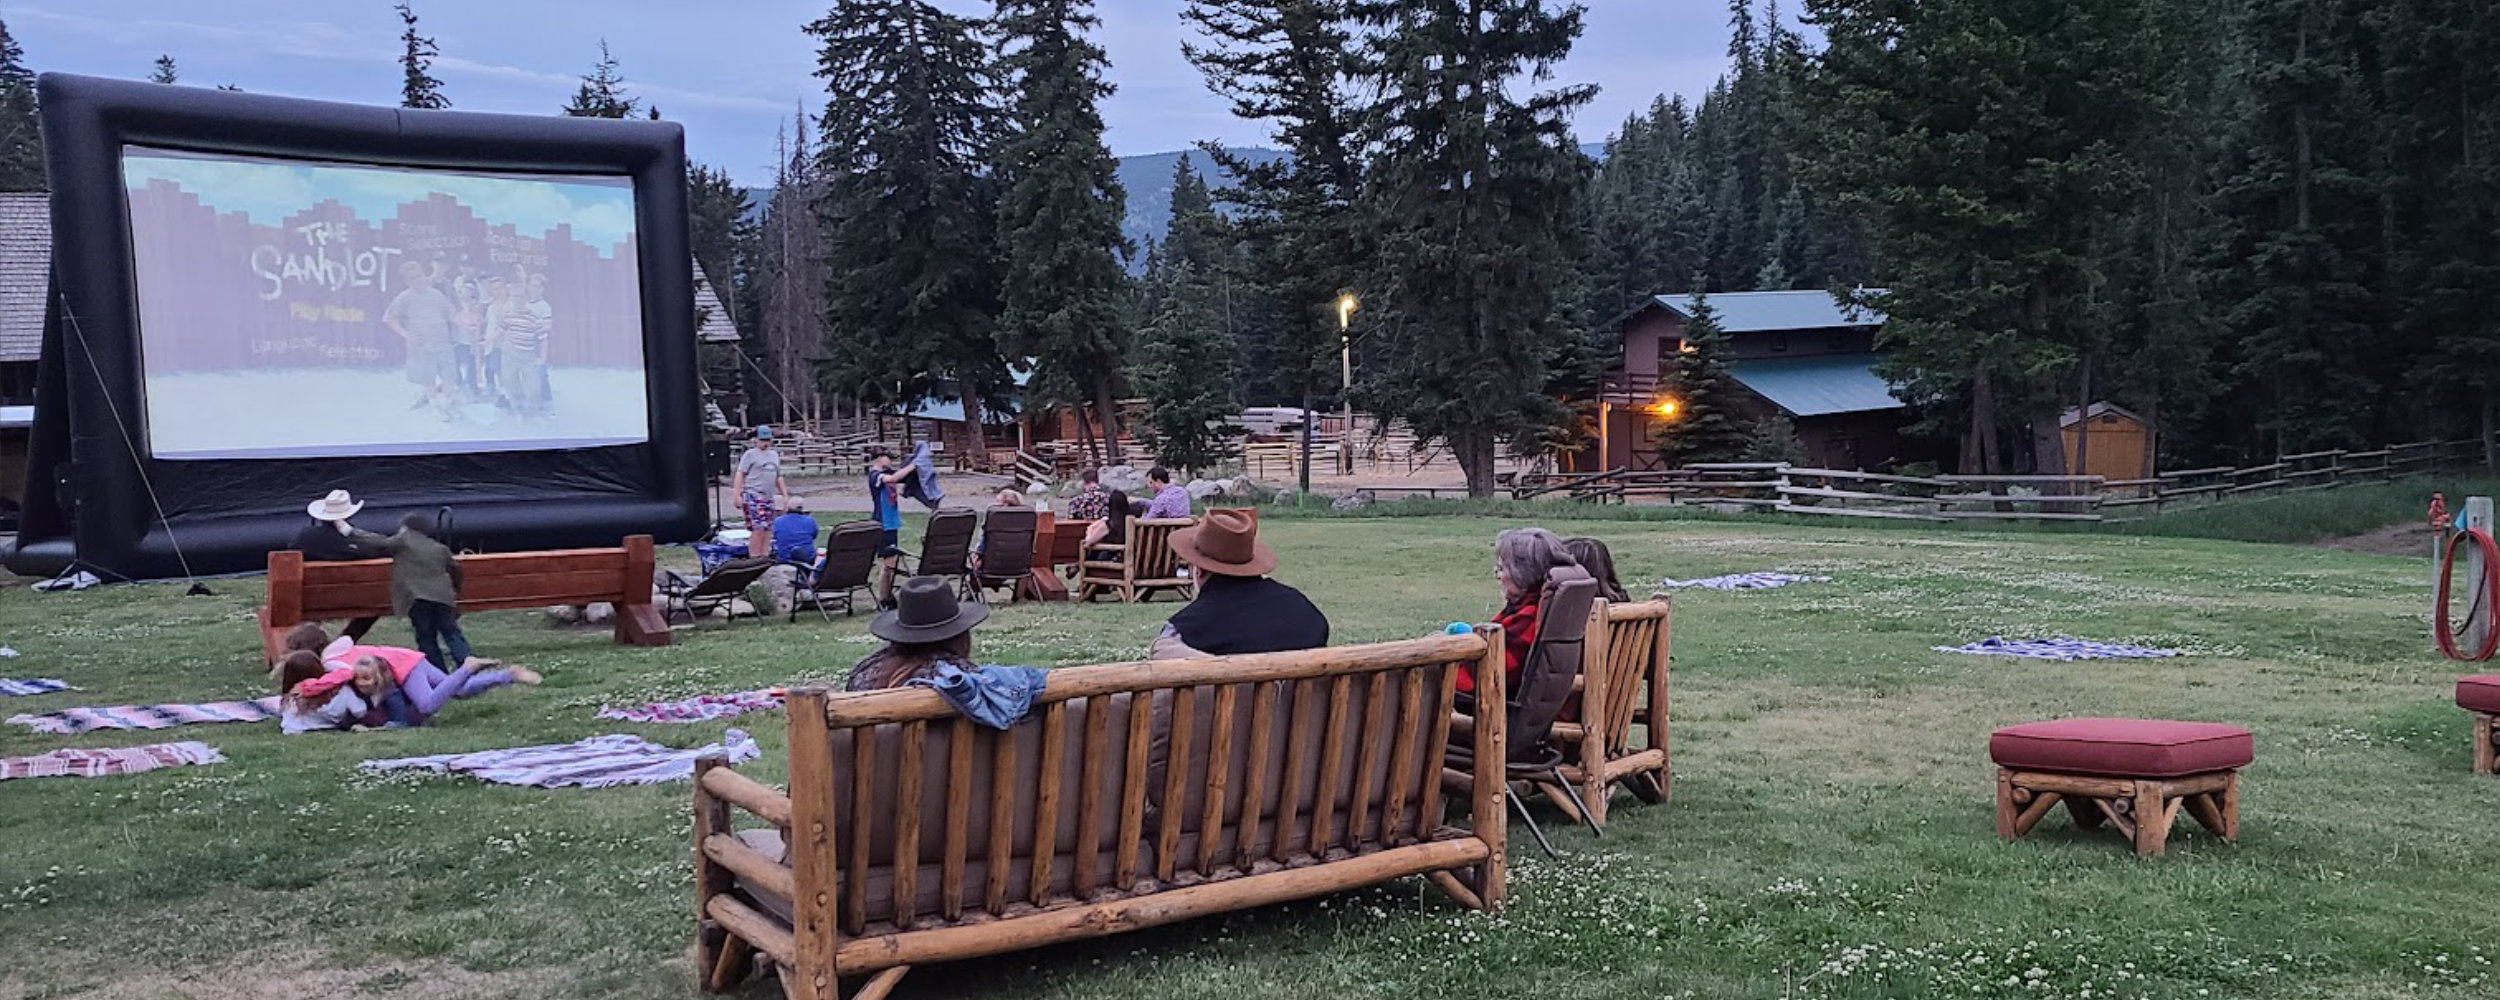 Montana-outdoor-movie-party